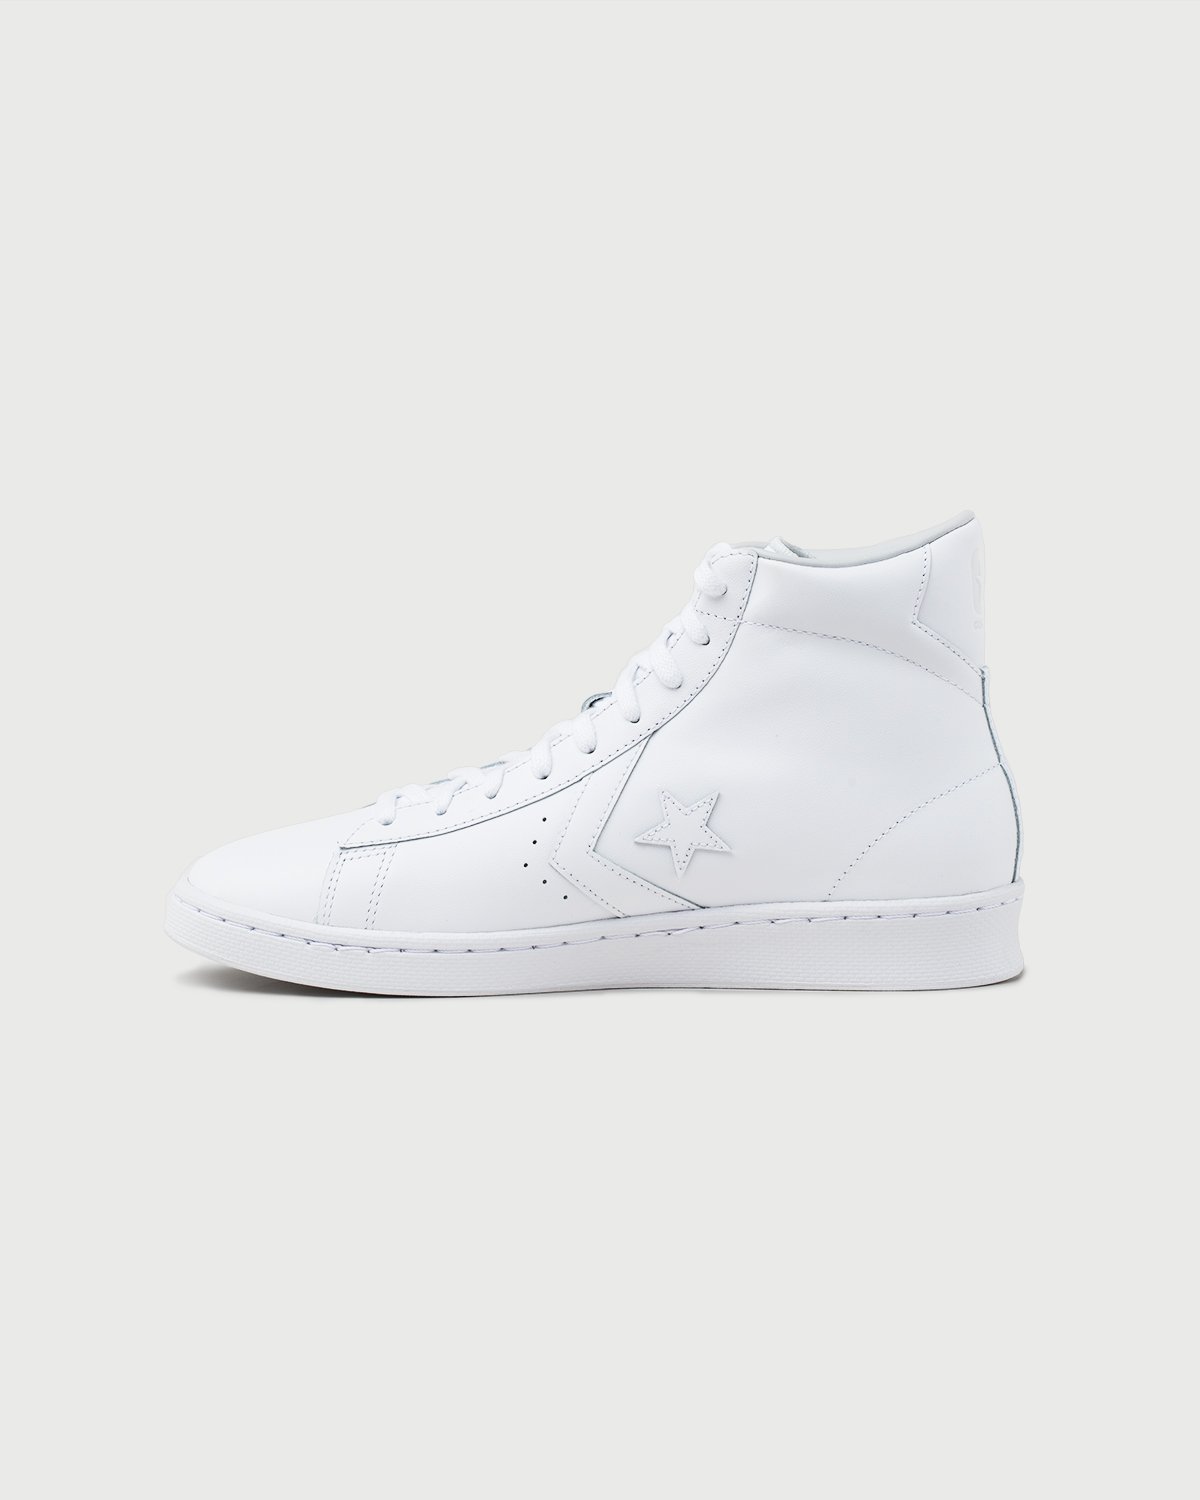 Converse - Pro Leather Hi White - Footwear - White - Image 4